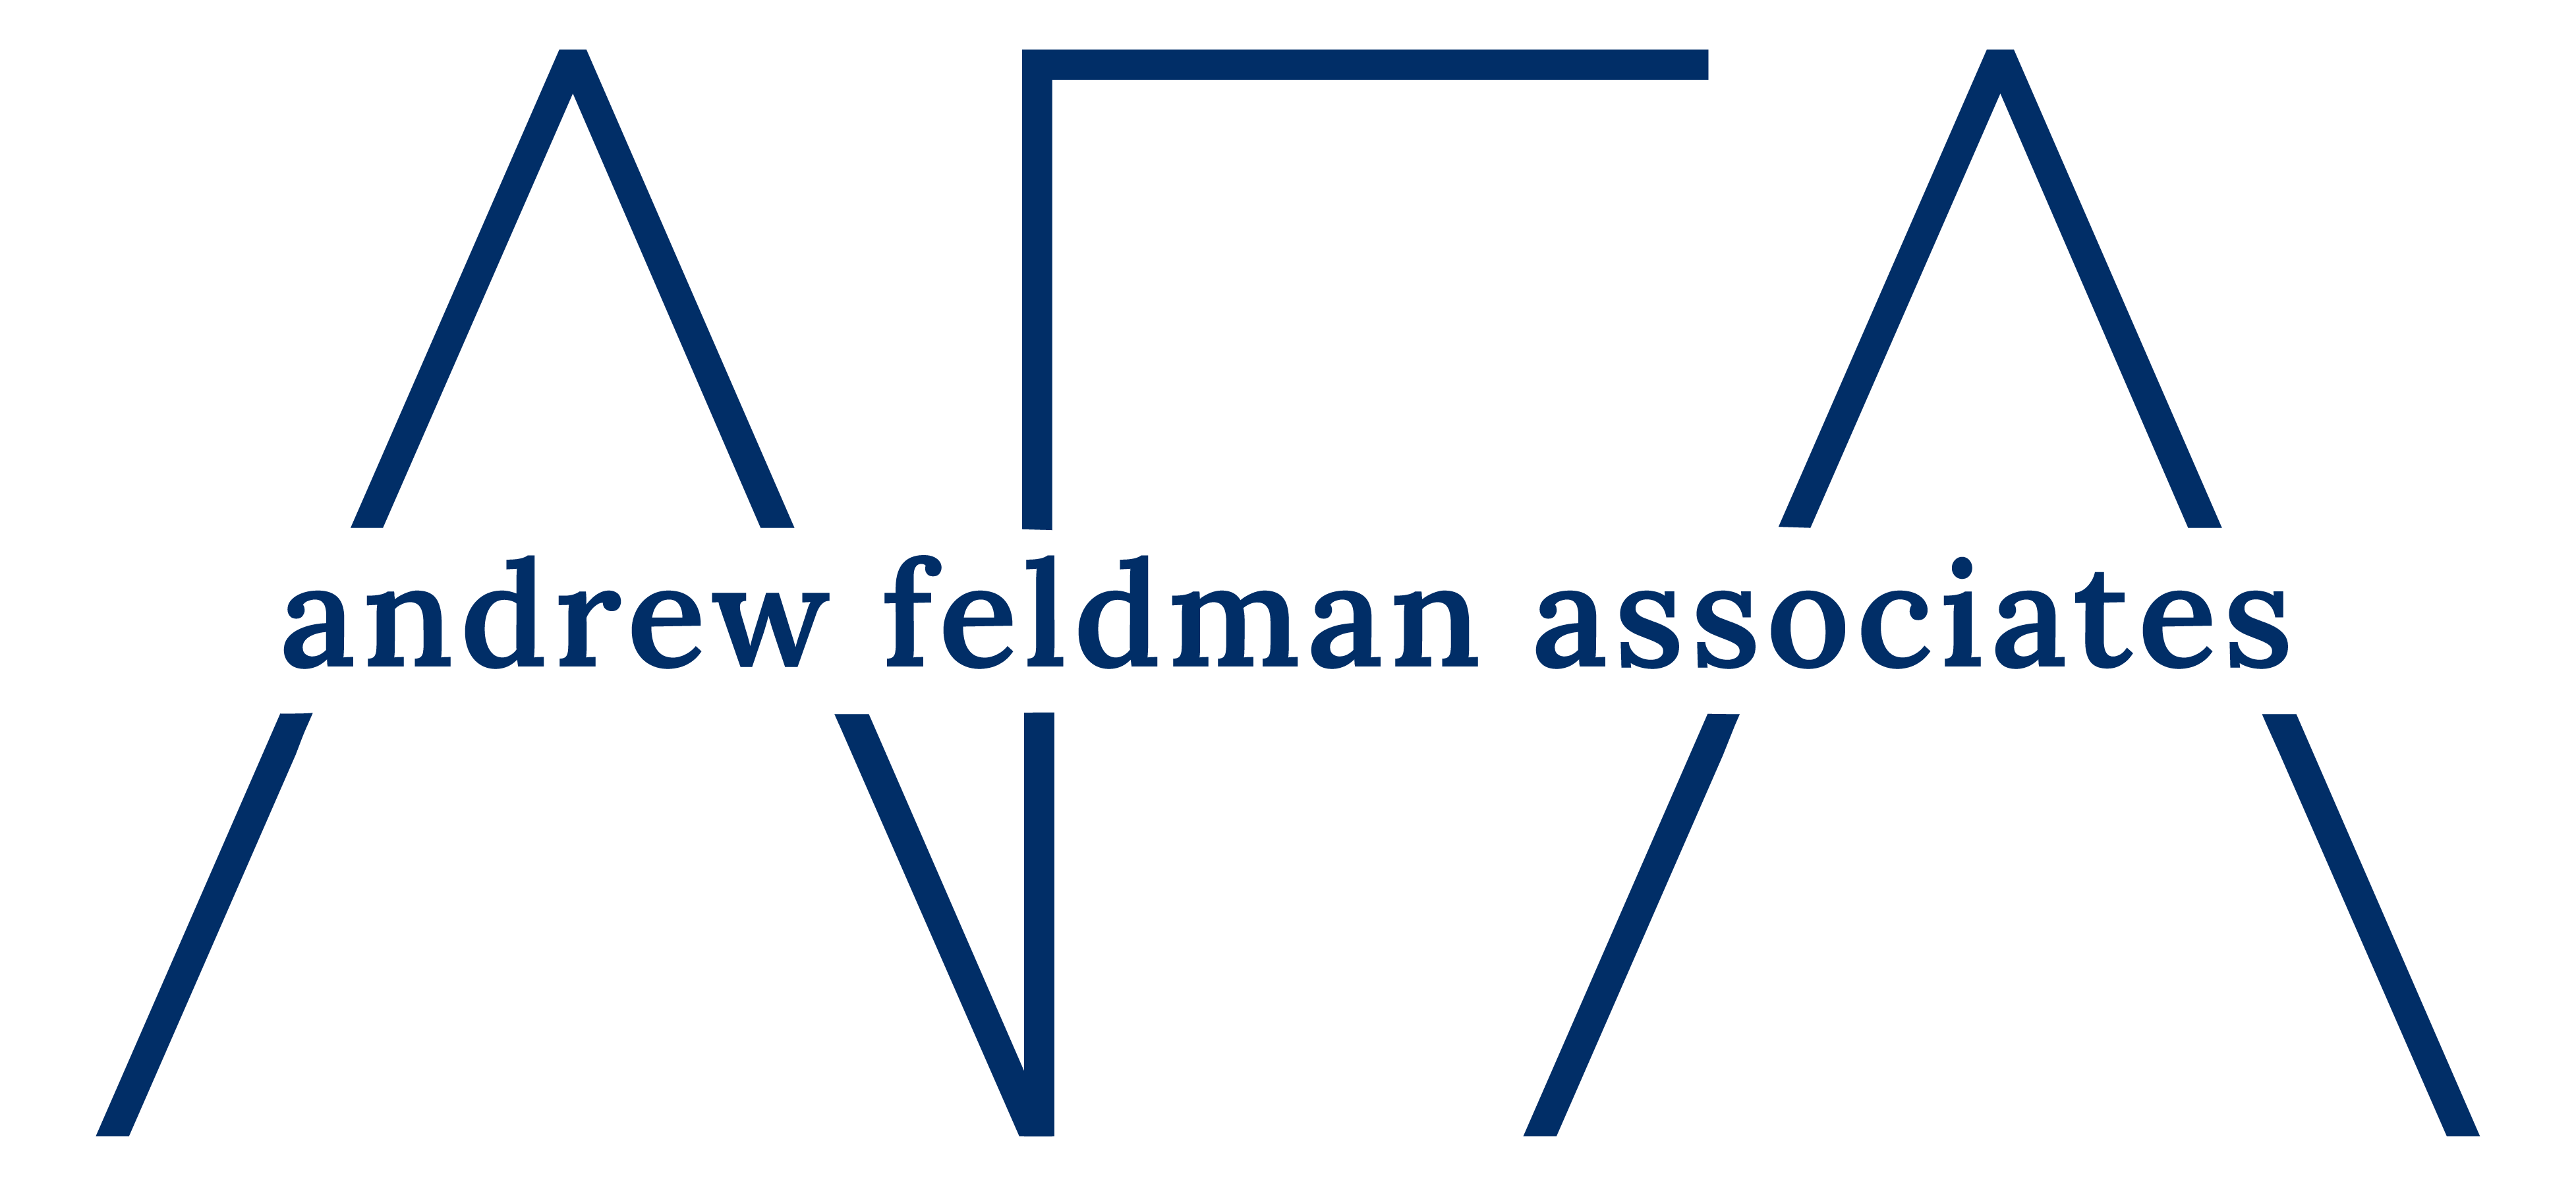 Andrew Feldman Associates